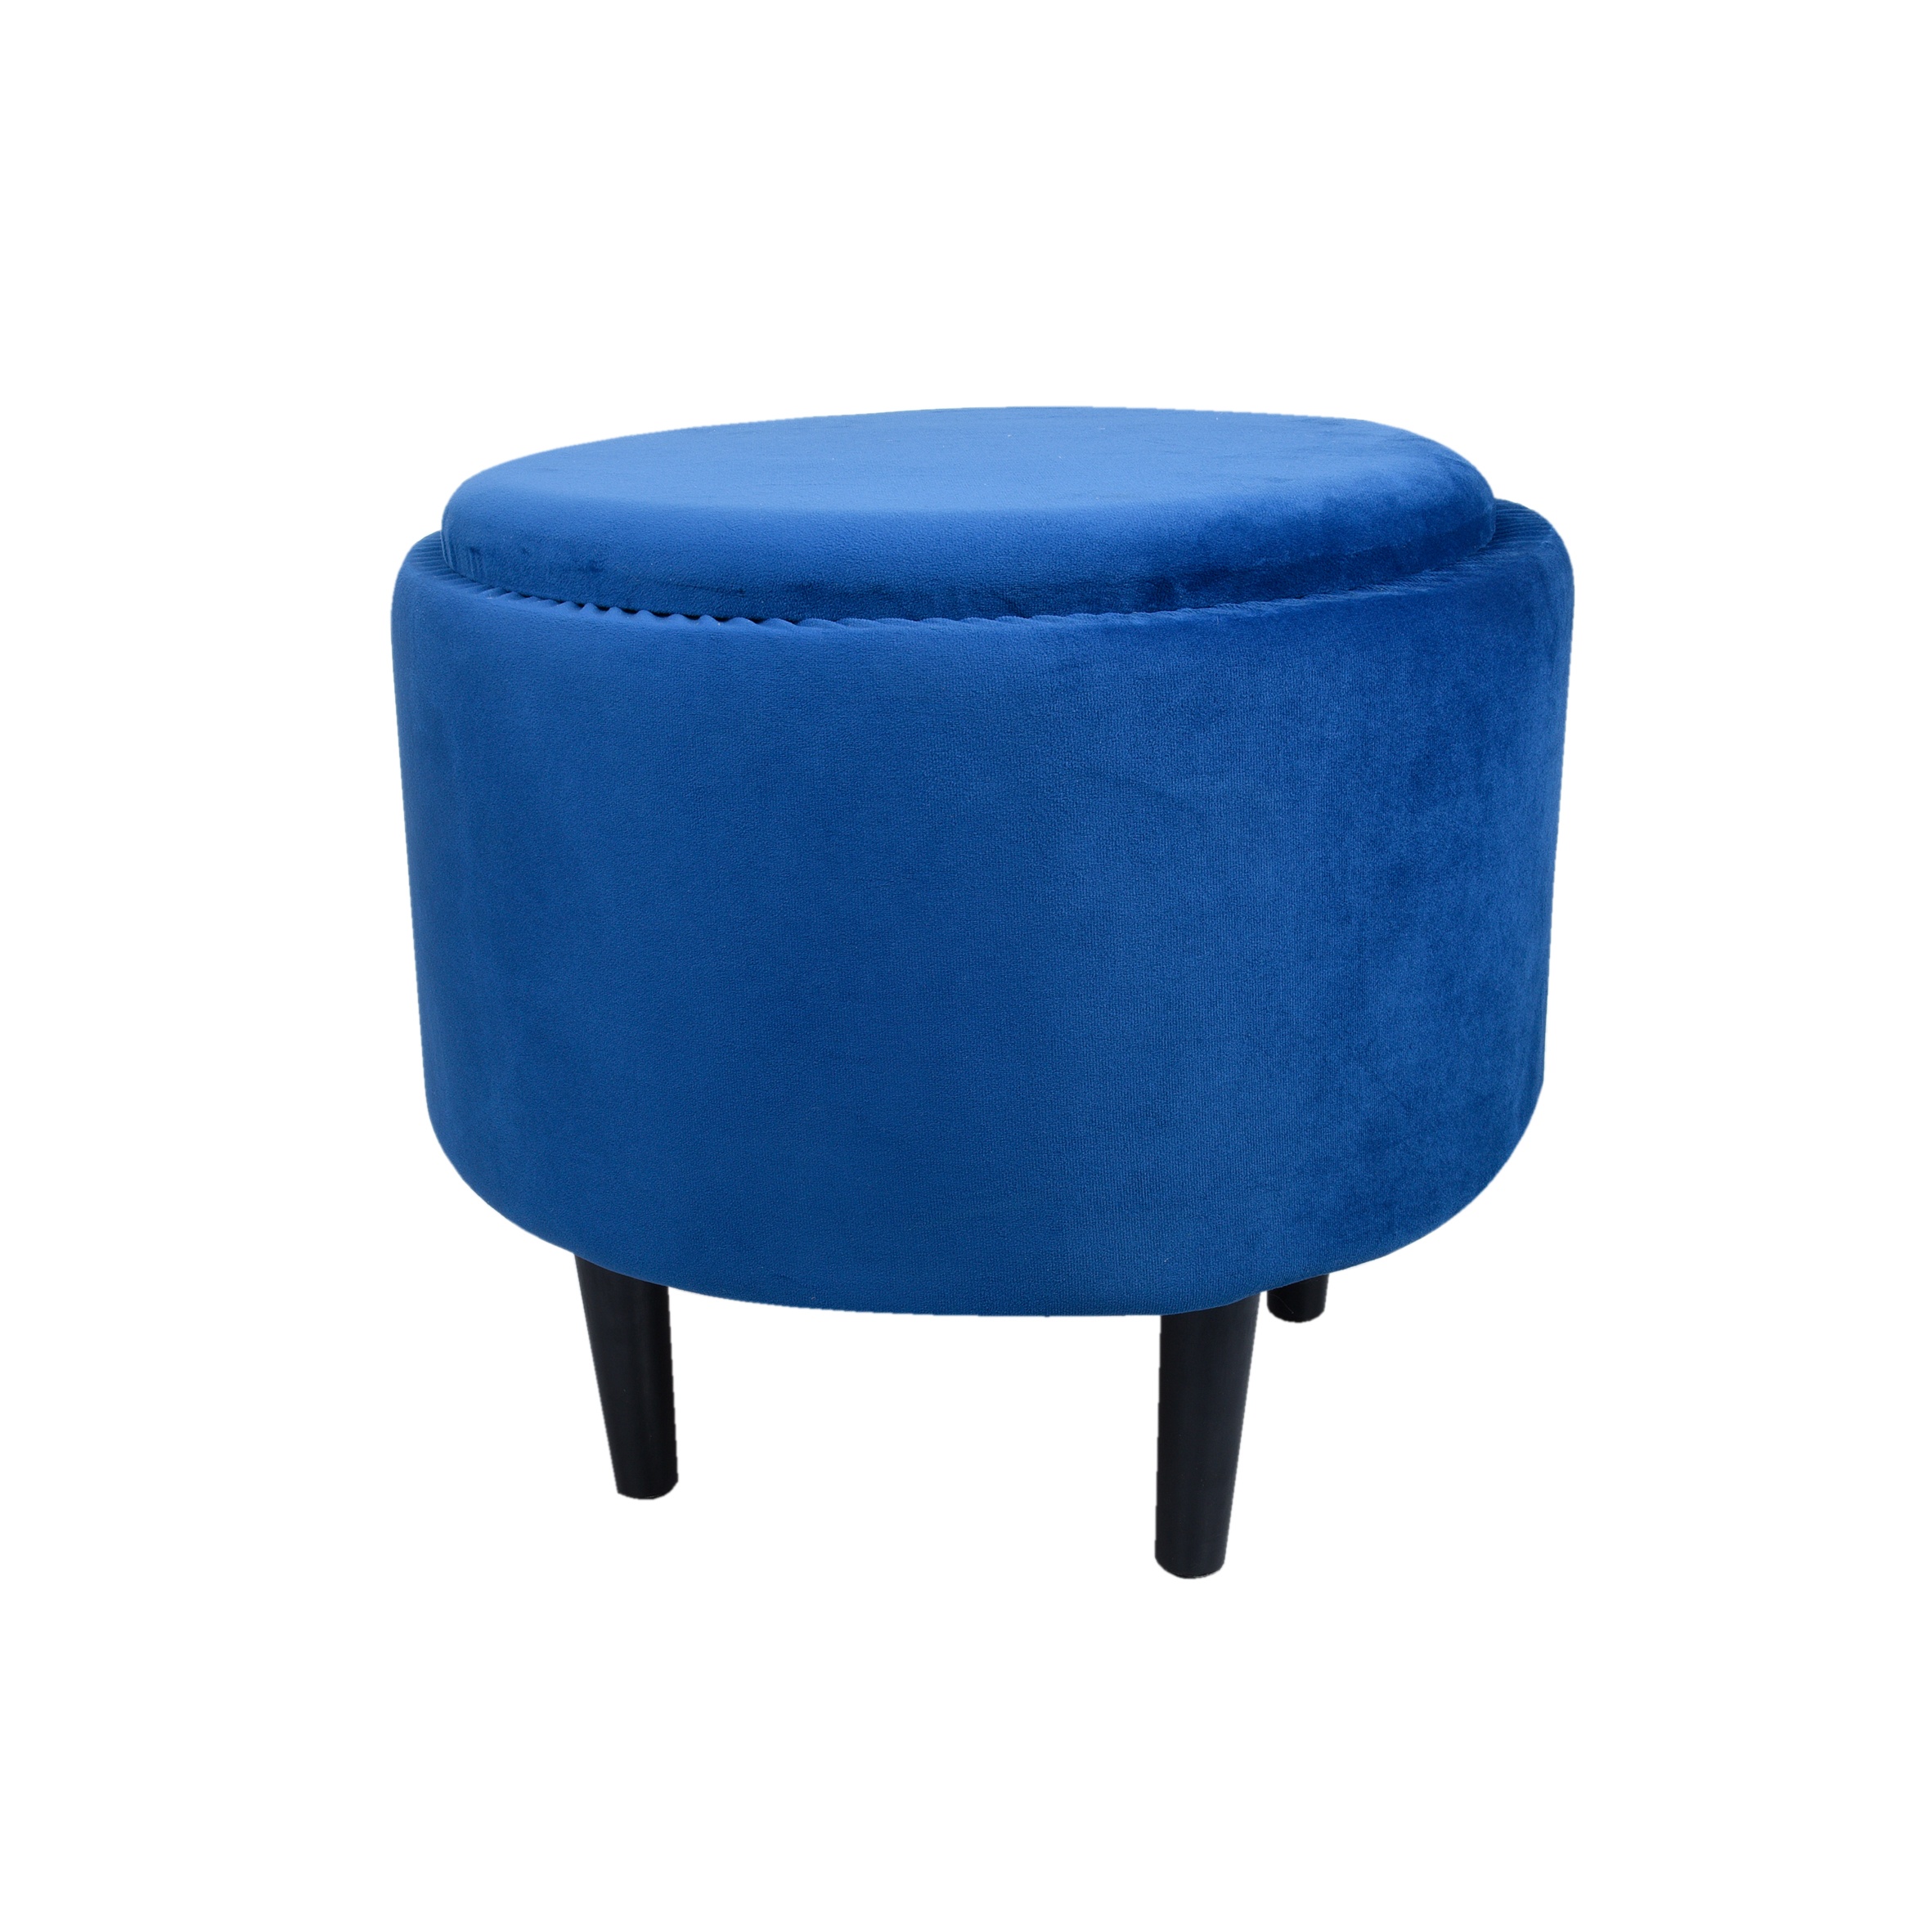 Modern Living Room luxury chair velvet round storage stool with wood black legs